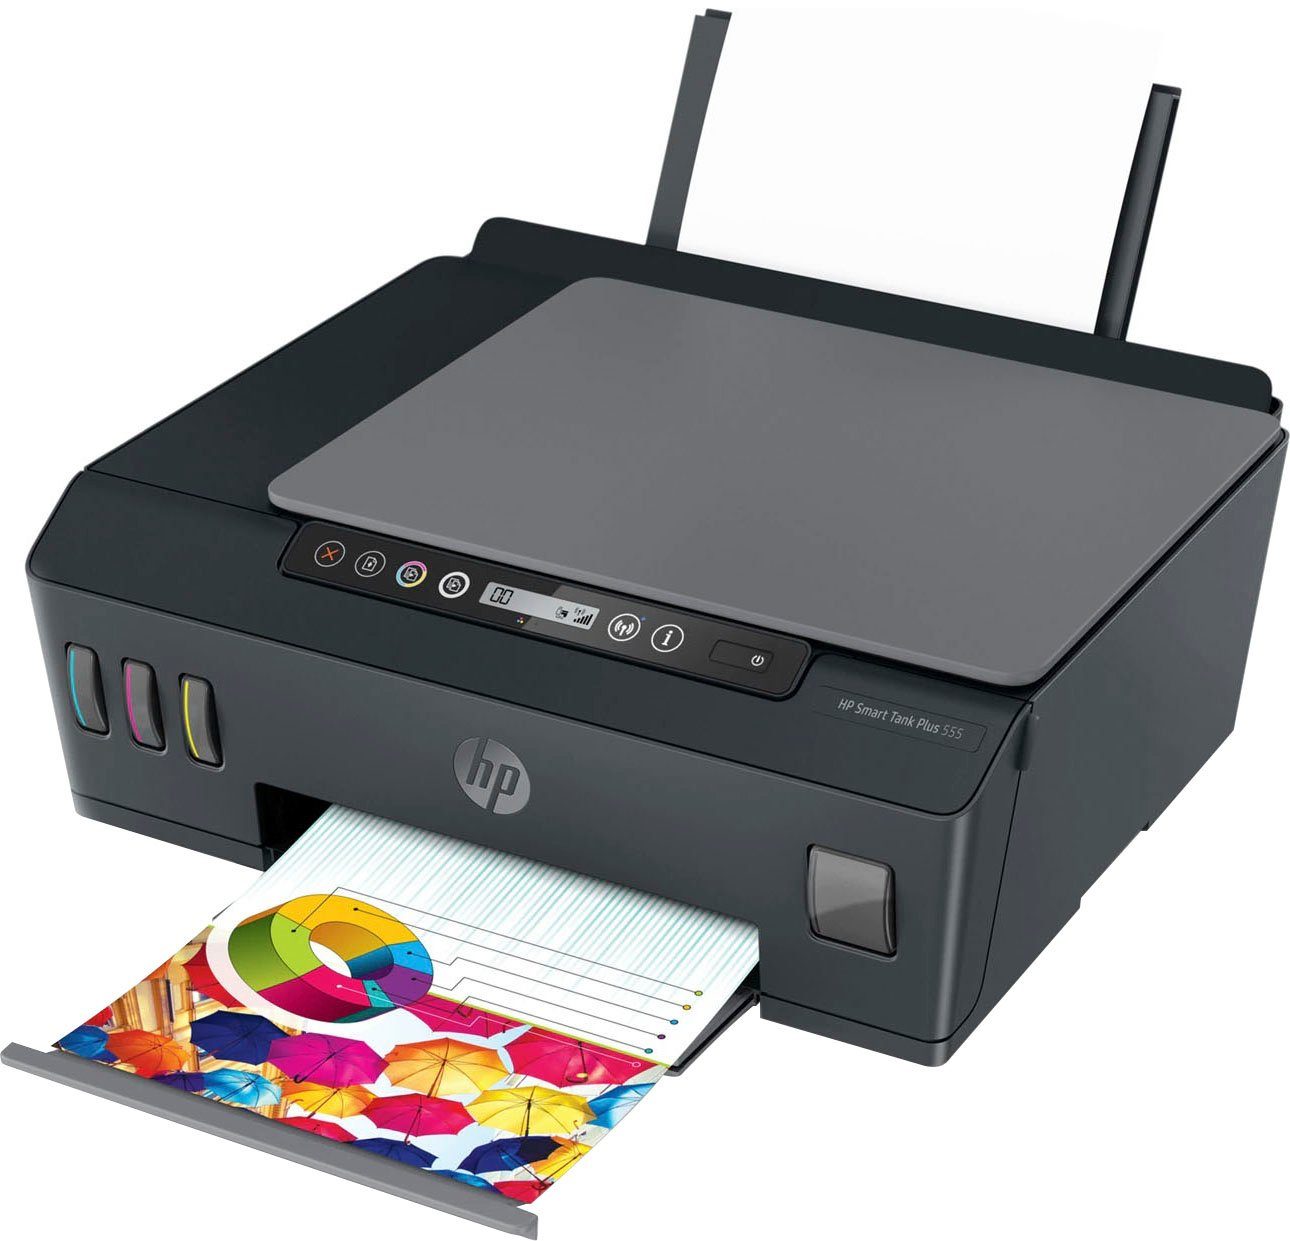 555 kompatibel) Multifunktionsdrucker, HP+ Plus (Bluetooth, Direct, Instant Ink Smart Wi-Fi Tank HP